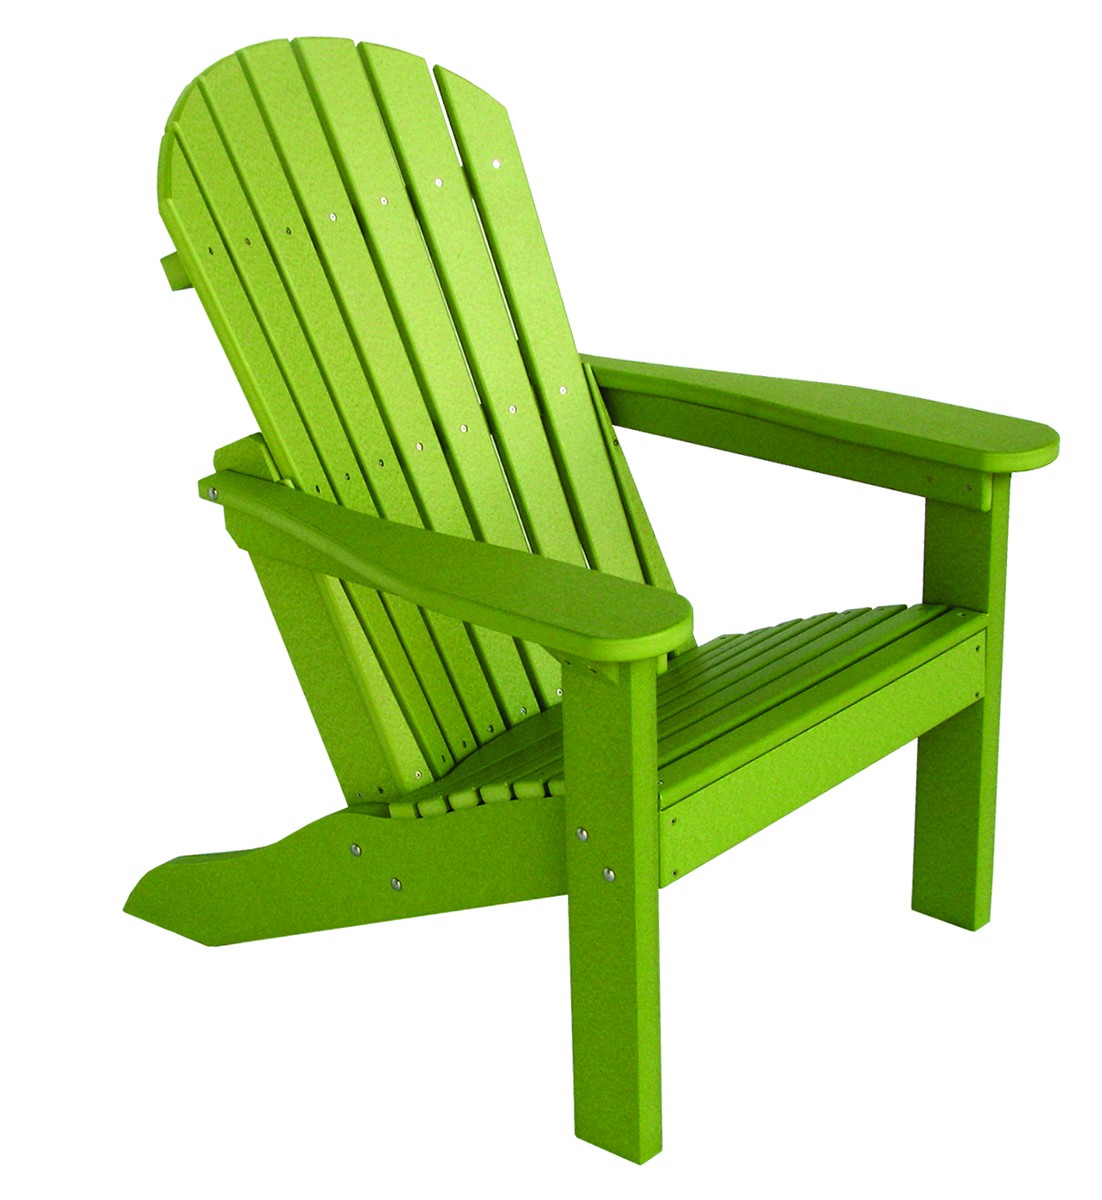 Patc2400 Tropical Adirondack Chair 1200 